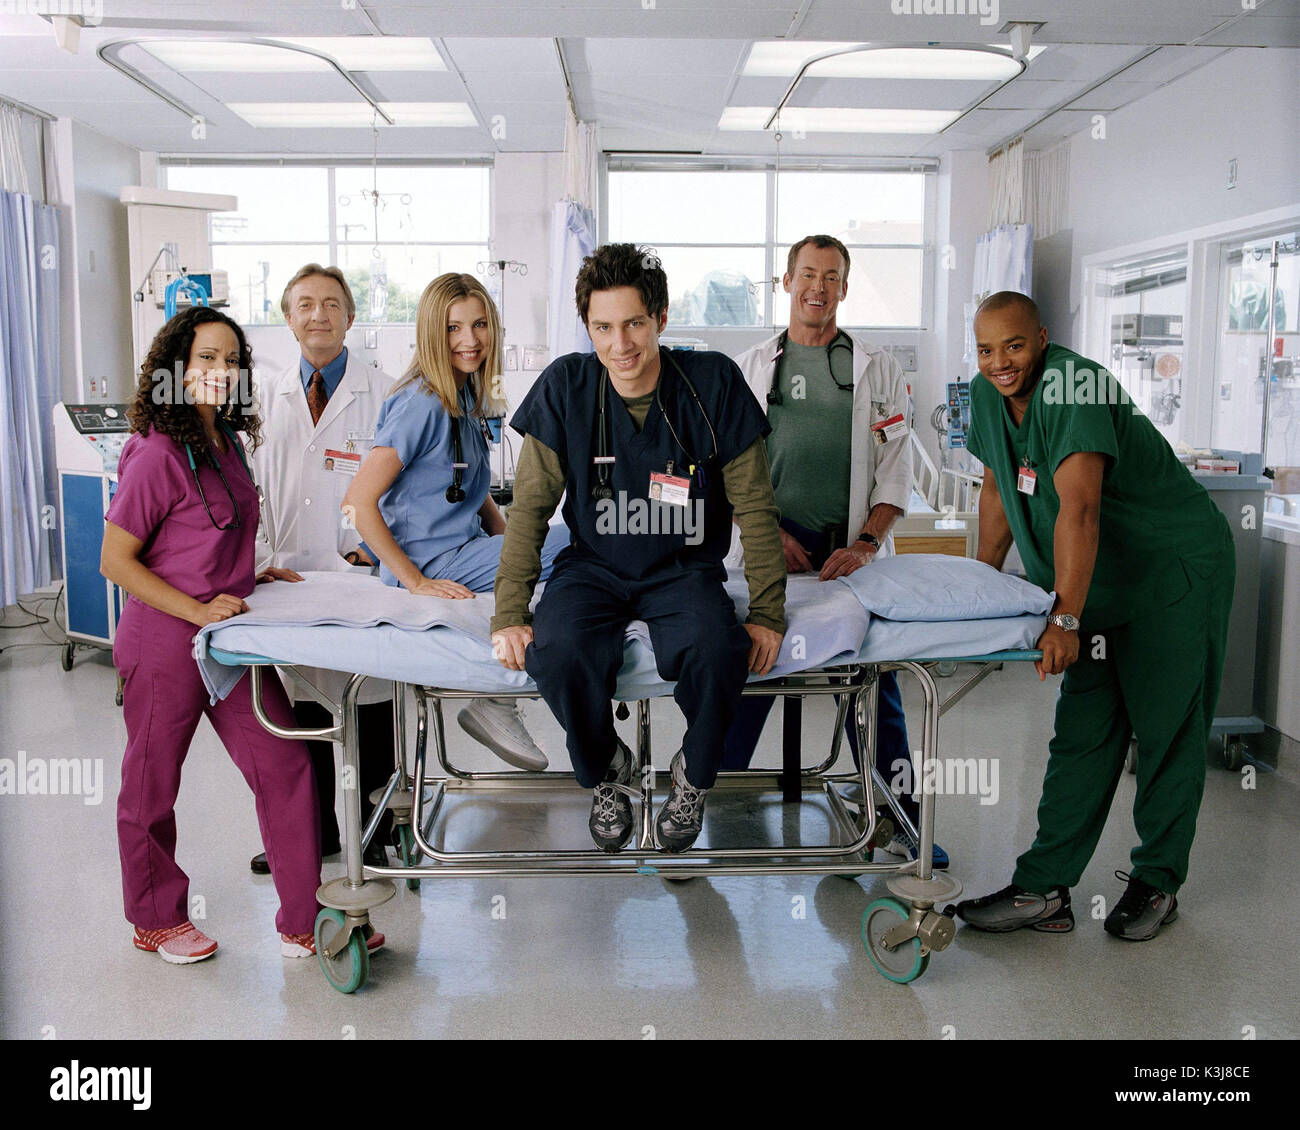 SCRUBS [US-TV-Serie 2001-Serie #1] [L - R] JUDY REYES als Krankenschwester Carla Espinosa KEN JENKINS als Dr. Bob Kelso SARAH CHALKE als Dr. Elliot Reid, Zach Braff als Dr. J.D. Dorian, JOHN C MCGINLEY als Dr. Perry Cox, DONALD FAISON als Dr. Chris Turk SCRUBS [US-TV-Serie 2001-Serie #1] [L - R] JUDY REYES als Krankenschwester Carla Espinosa KEN JENKINS als Dr. Bob Kelso SARAH CHALKE als Dr. Elliot Reid, Zach Braff als Dr. John "J.D." Dorian, JOHN C MCGINLEY als Dr. Perry Cox, DONALD FAISON als Dr. Chris Turk Stockfoto